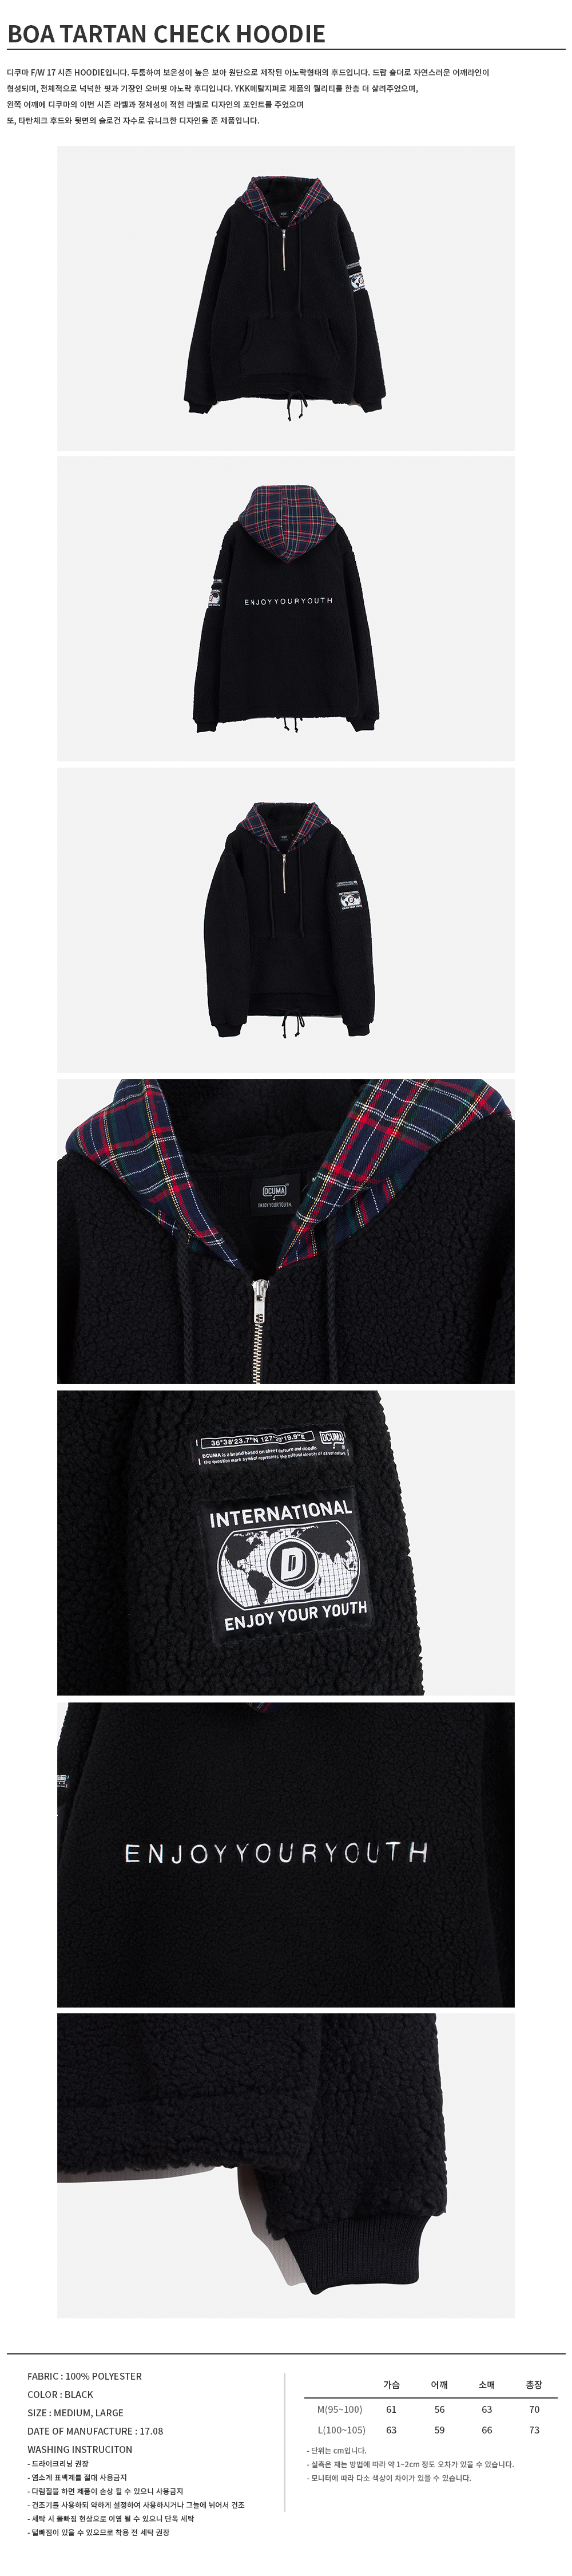 fw17_boa tartan check hoodie_black_detail.JPG